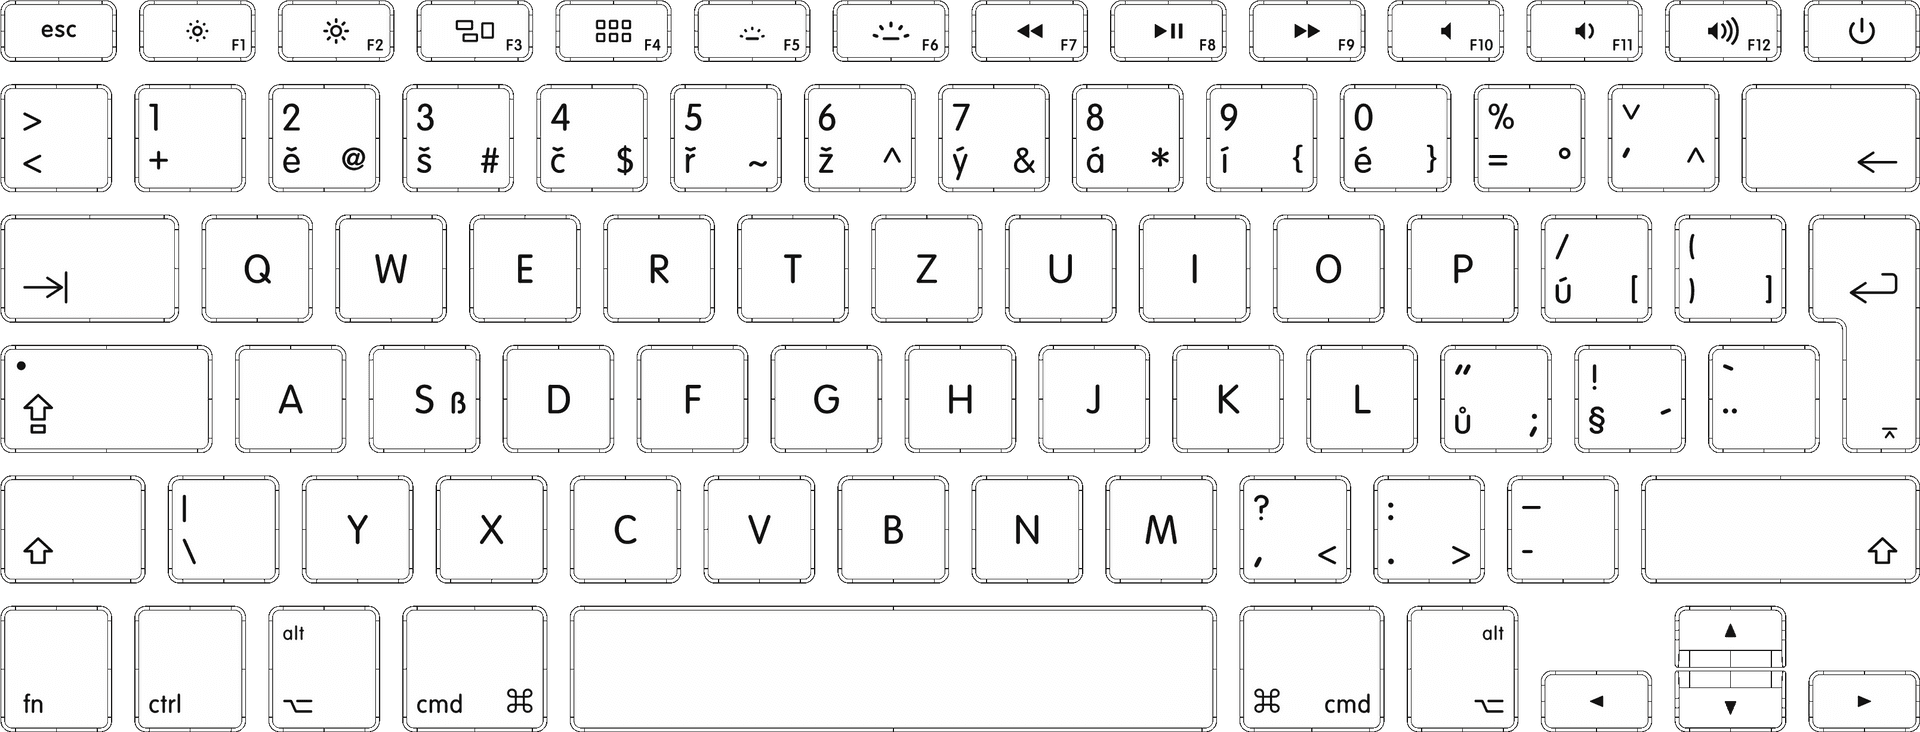 Multilingual Keyboard Layout PNG image